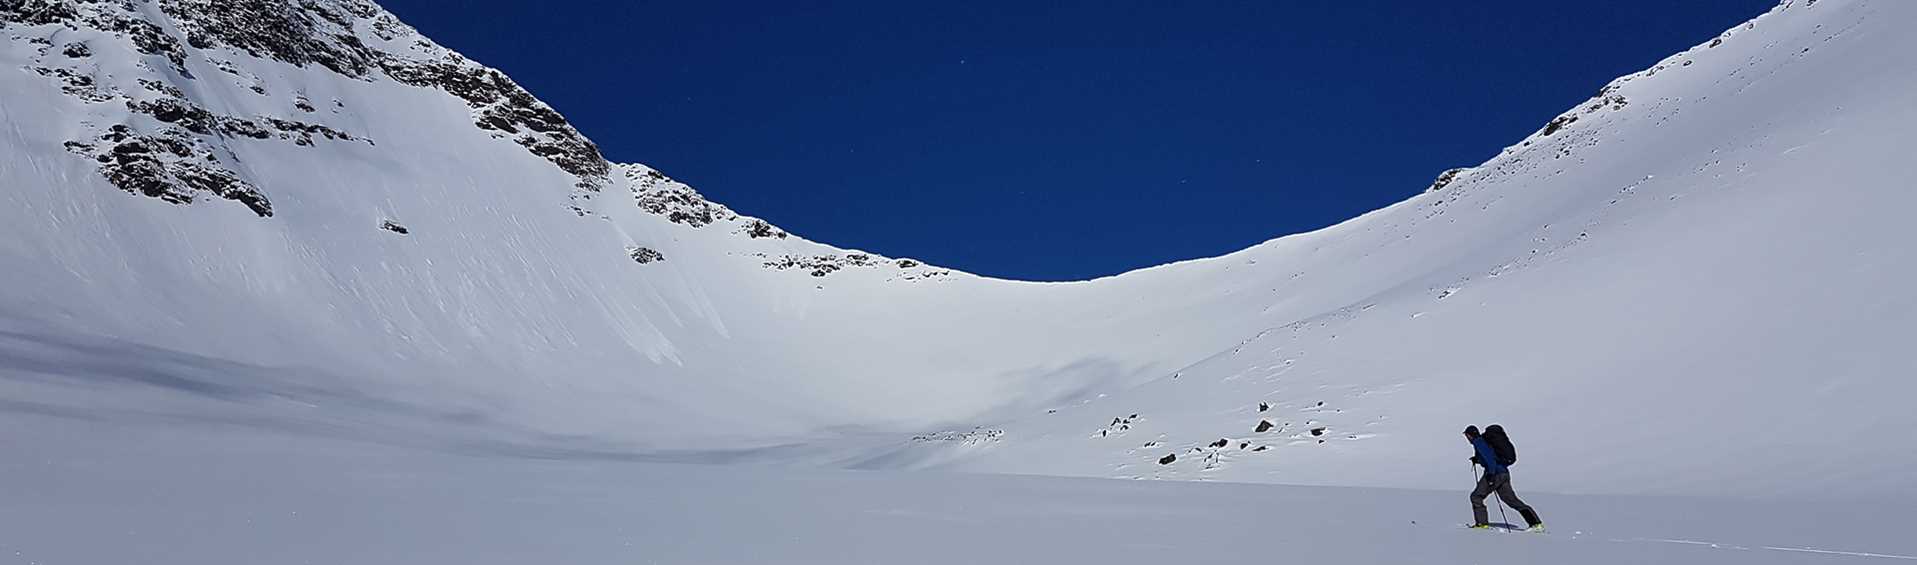 Single skier going over a snow plain